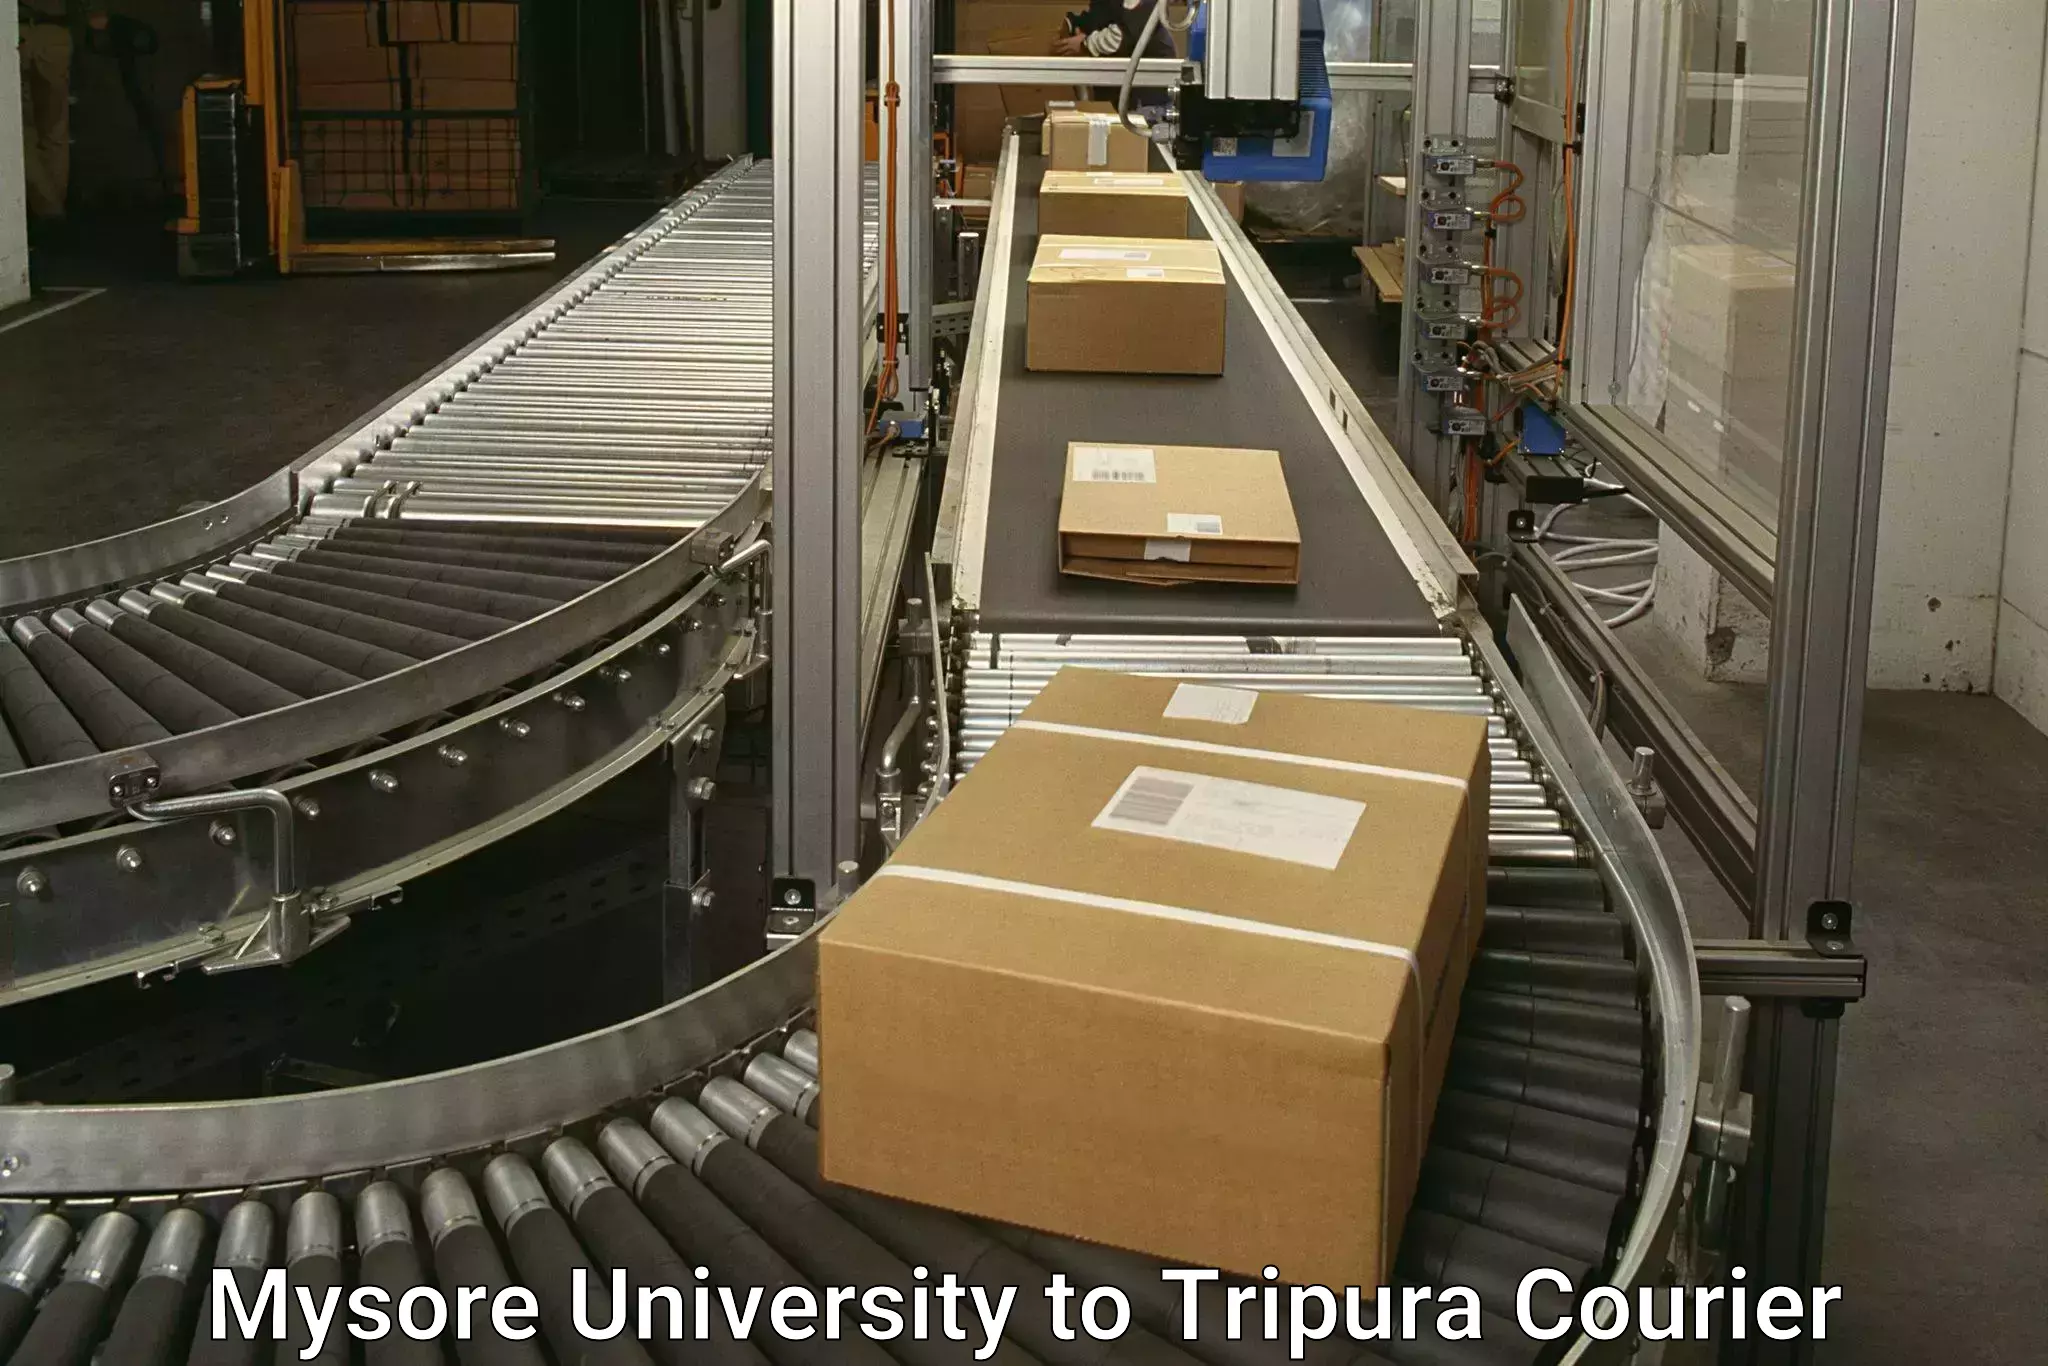 24/7 courier service Mysore University to Udaipur Tripura